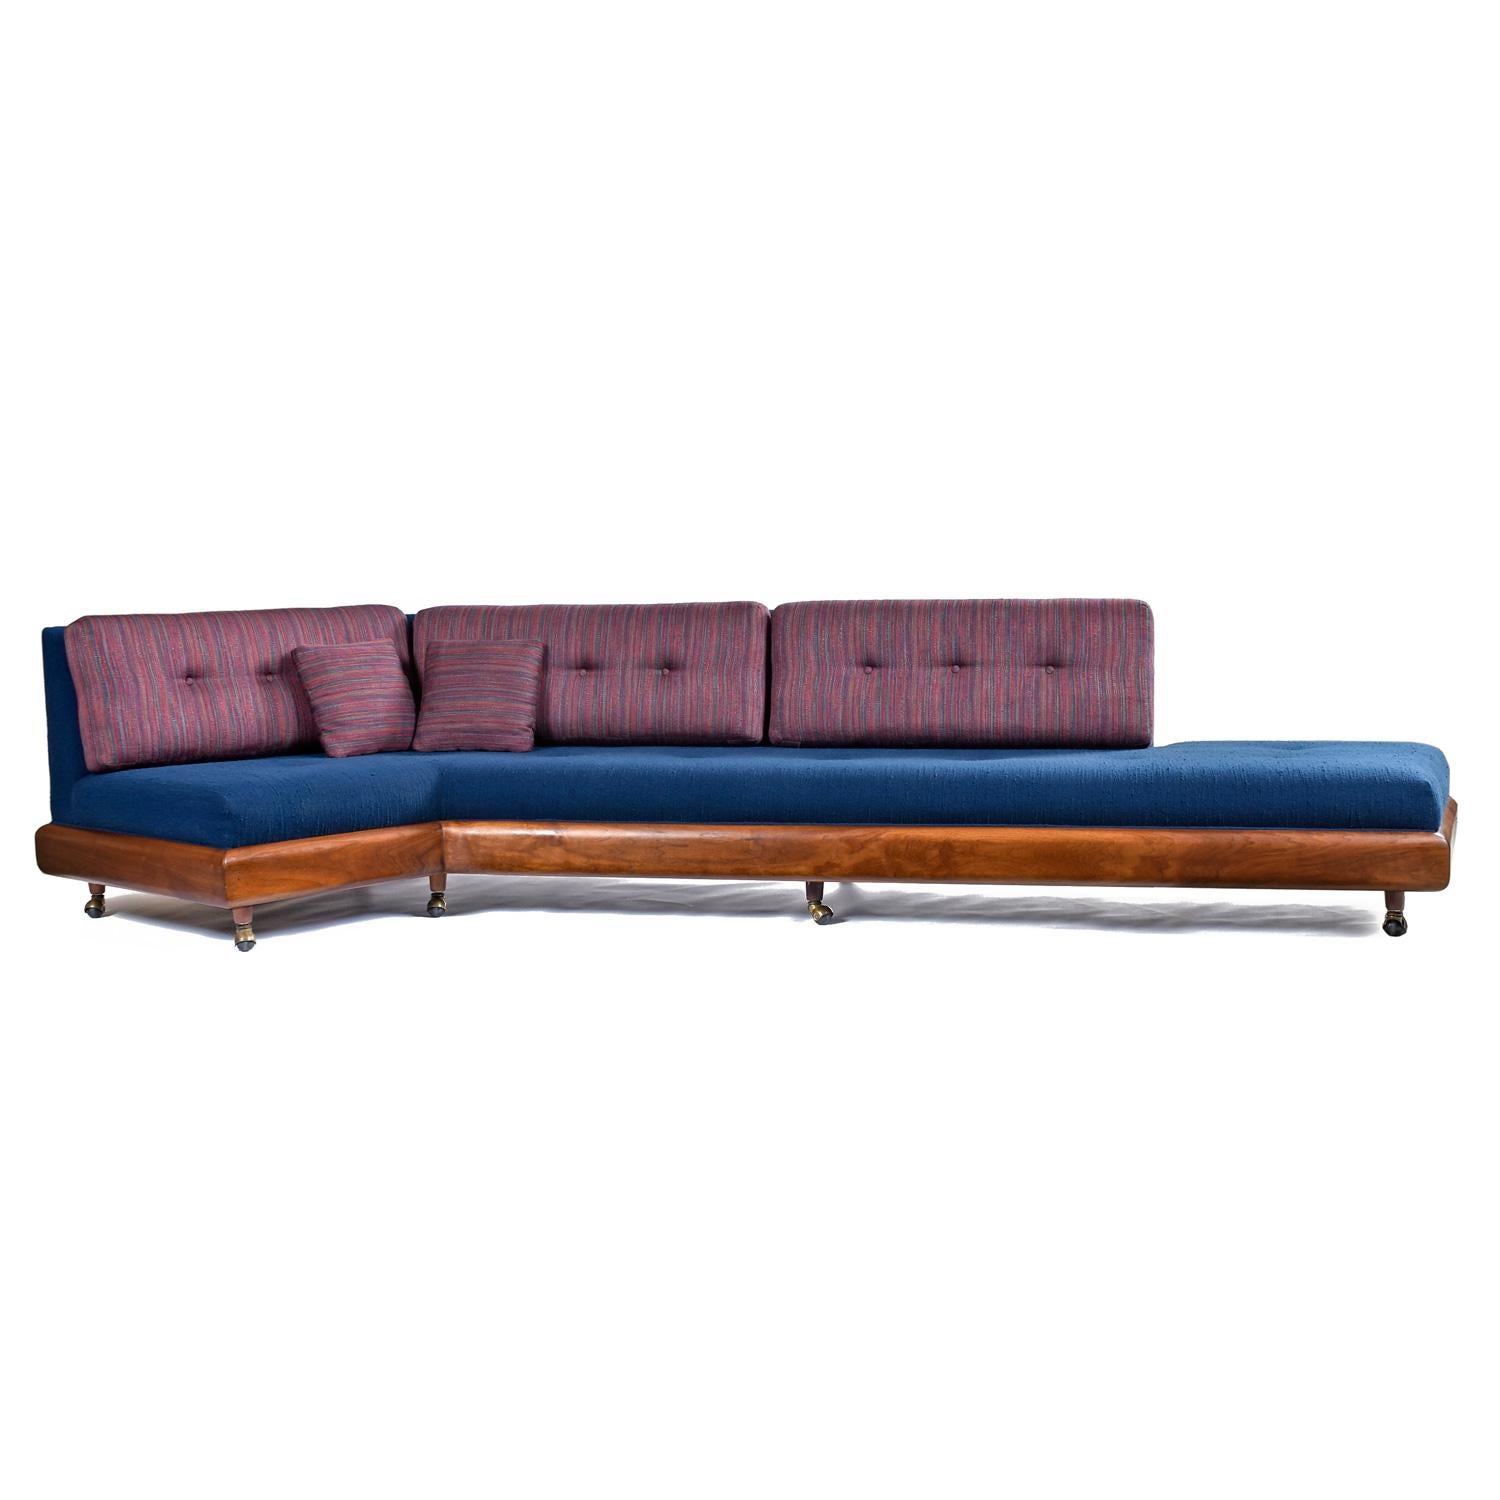 Mid-Century Modern Original Adrian Pearsall Platform Boomerang Sofa 2300-S for Craft Associates For Sale